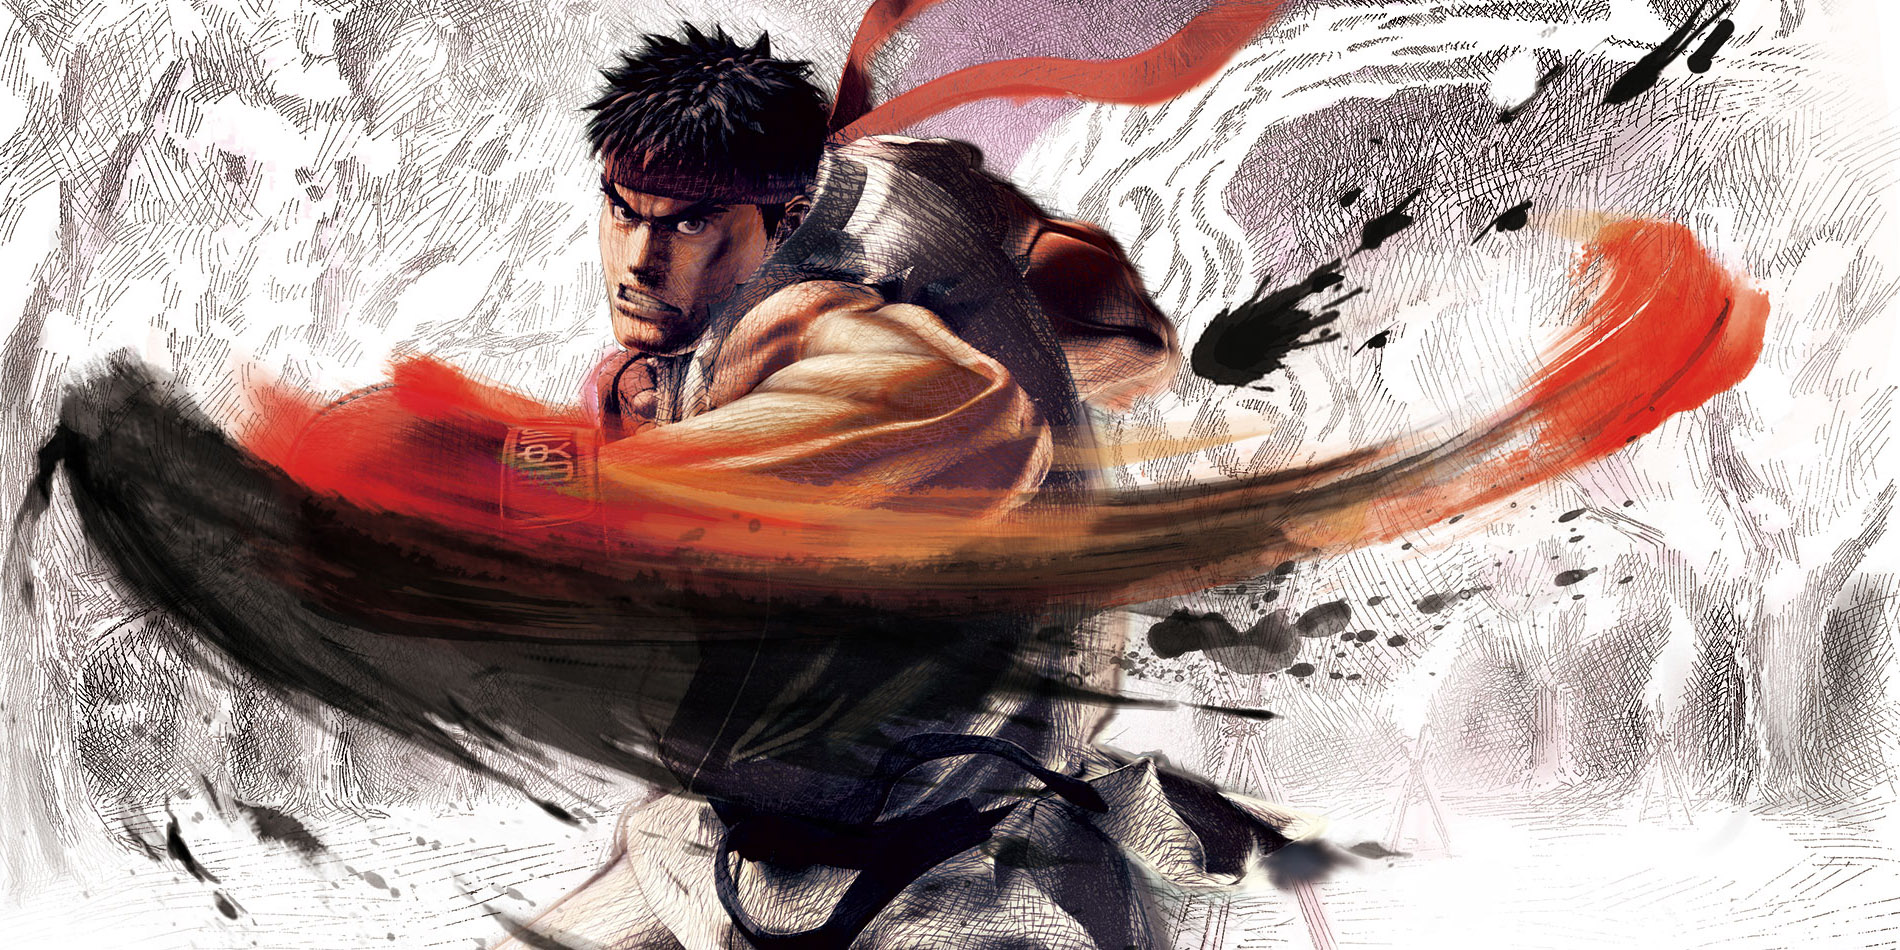 ryu street fighter tapete,kung fu,illustration,erfundener charakter,cg kunstwerk,grafikdesign